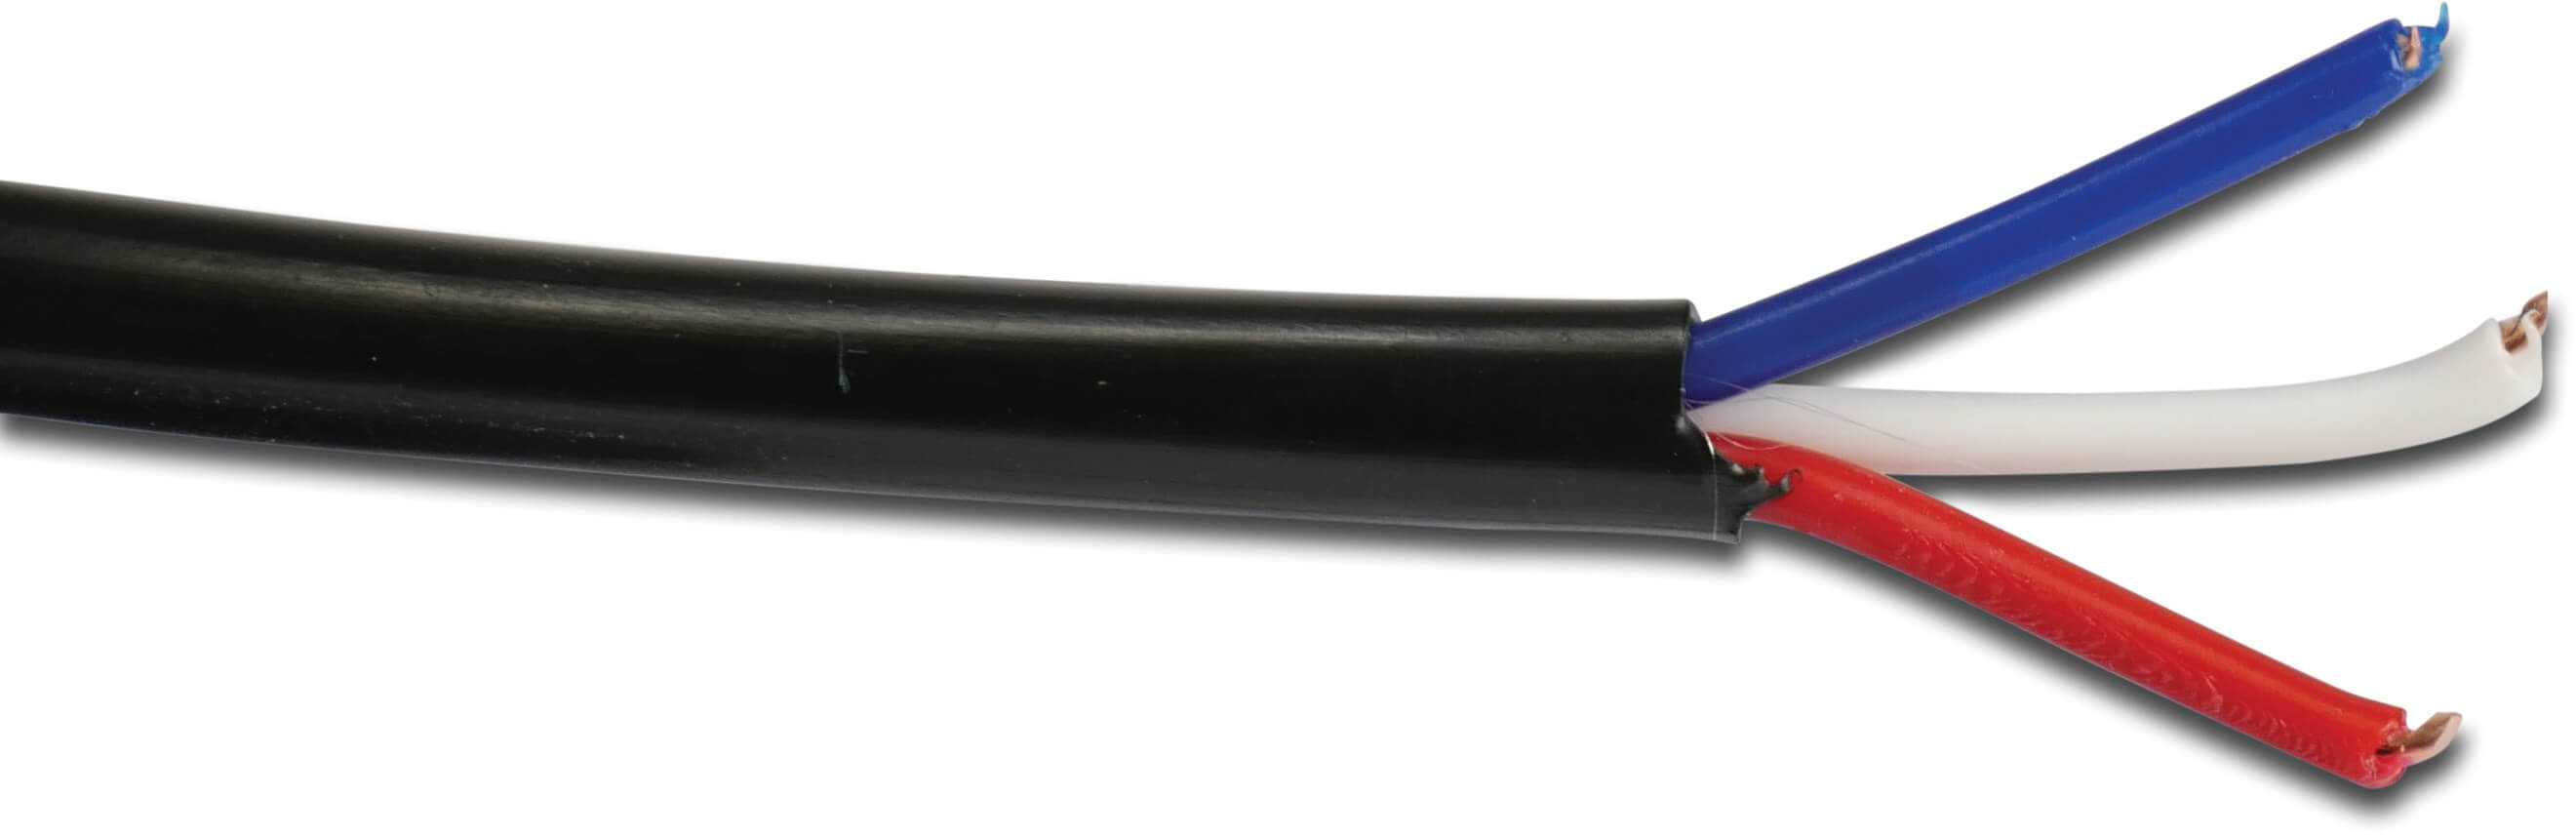 Stromkabel 50m type 3 x 0,75mm² 3 colour coded conductors